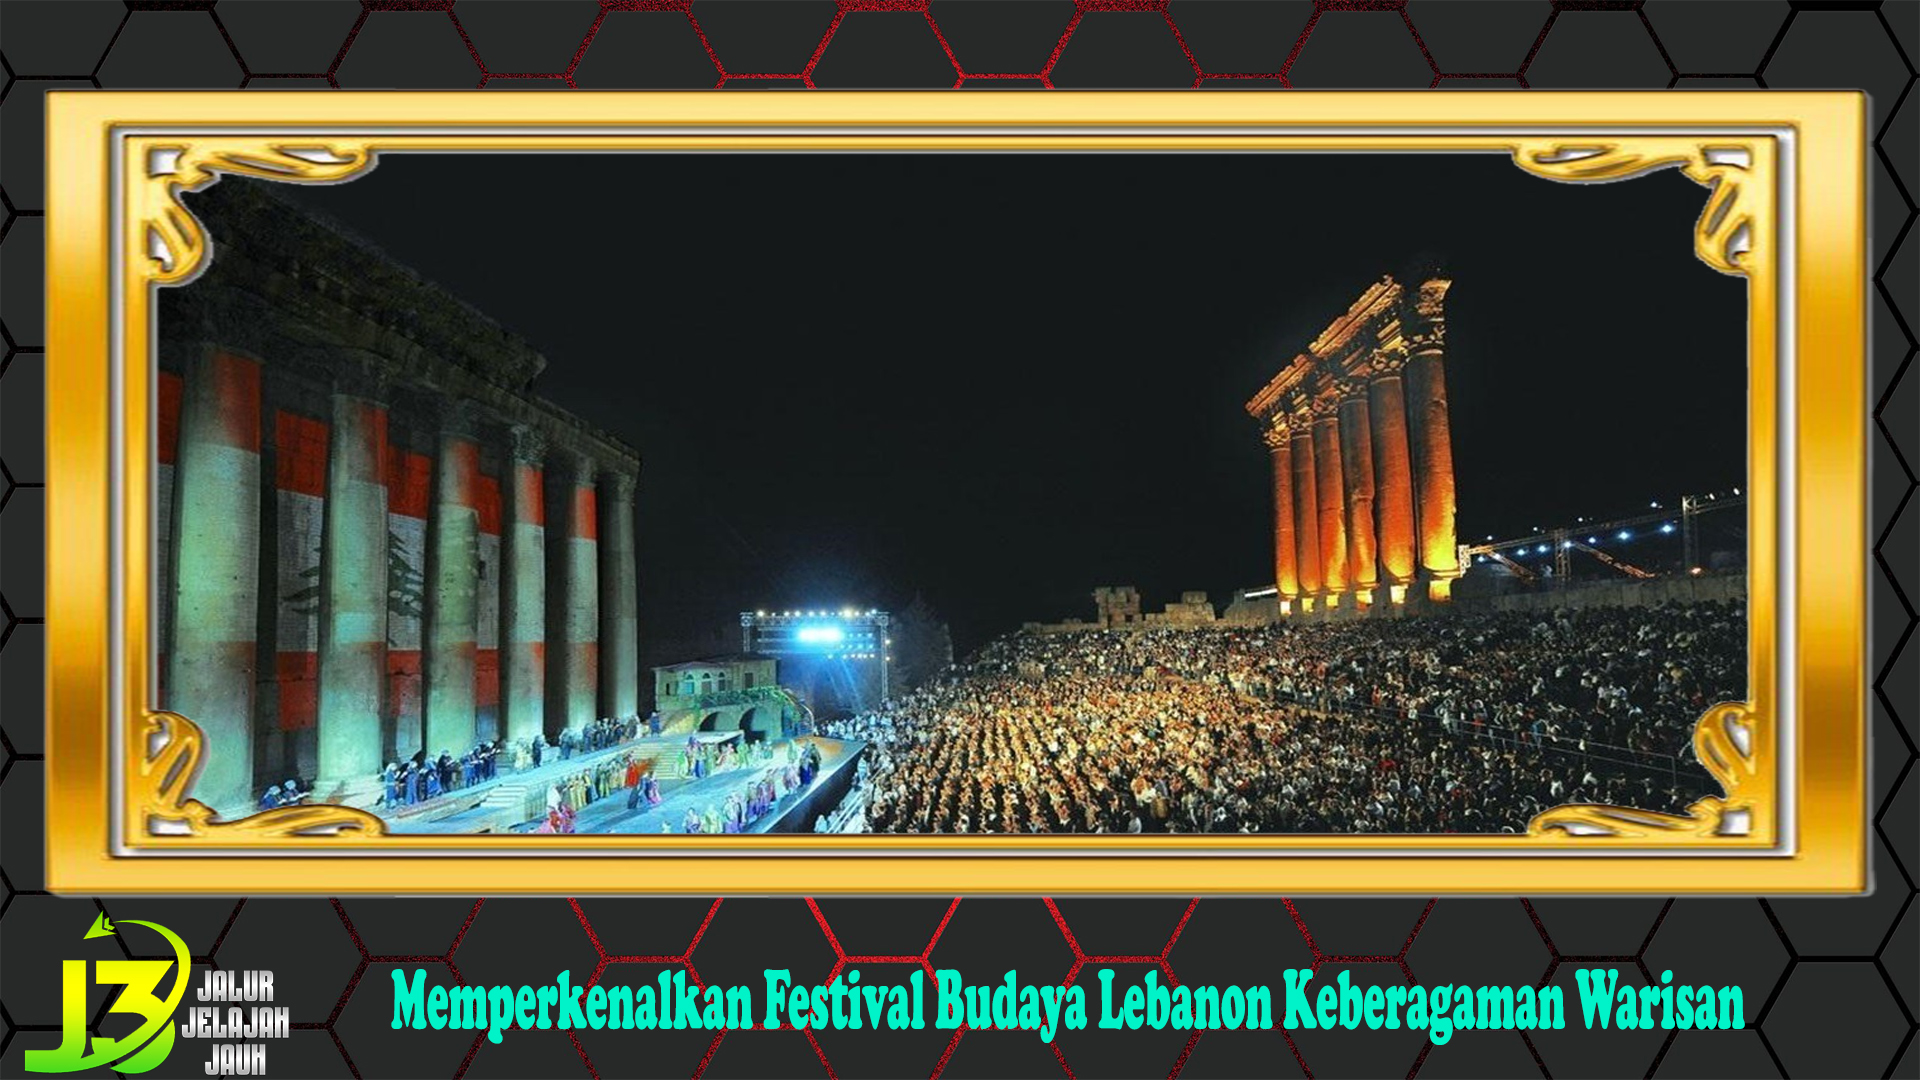 Memperkenalkan Festival Budaya Lebanon Keberagaman Warisan